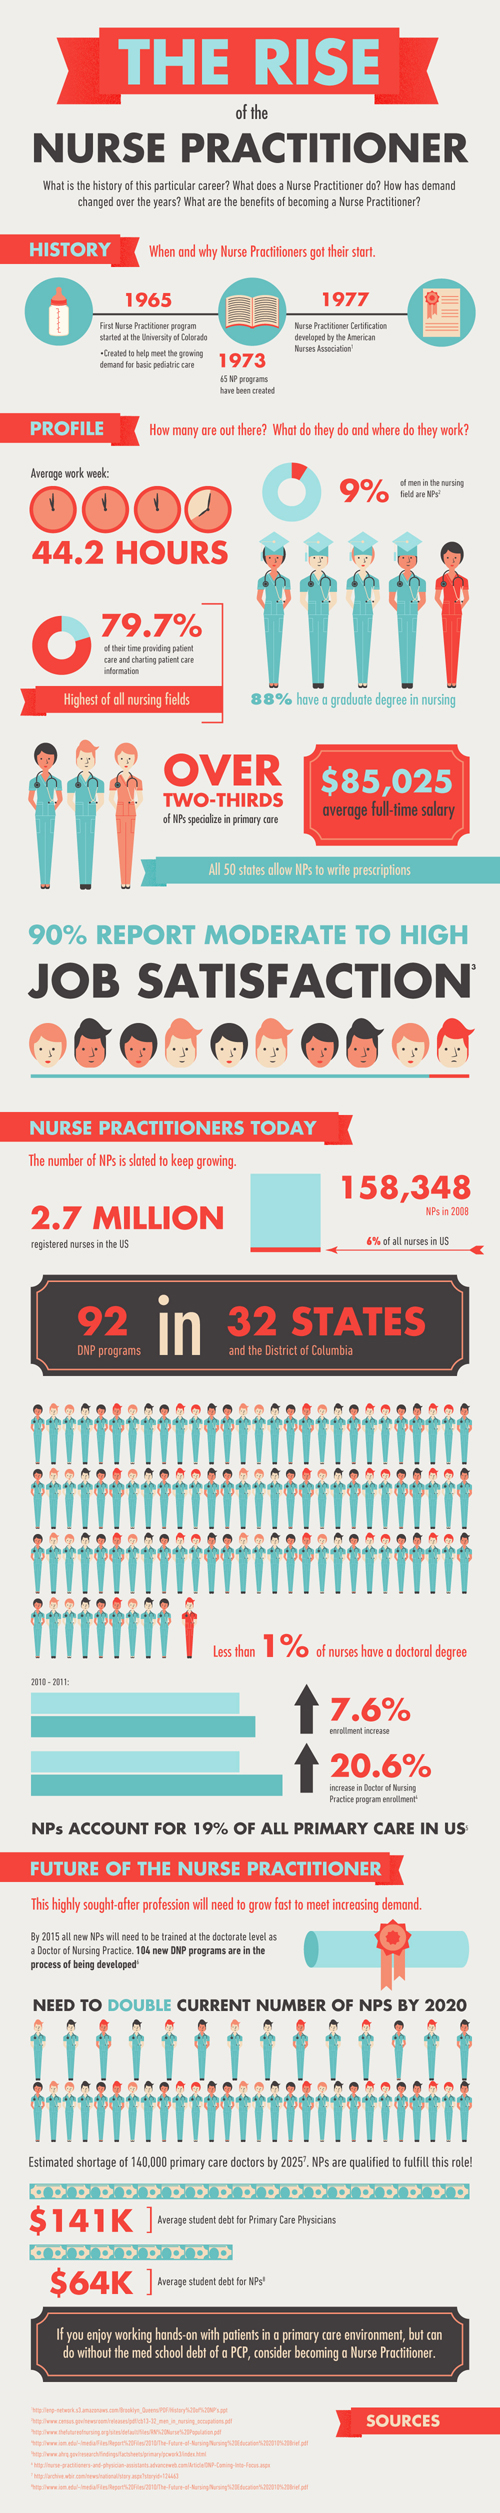 Nurse practitioner infographic